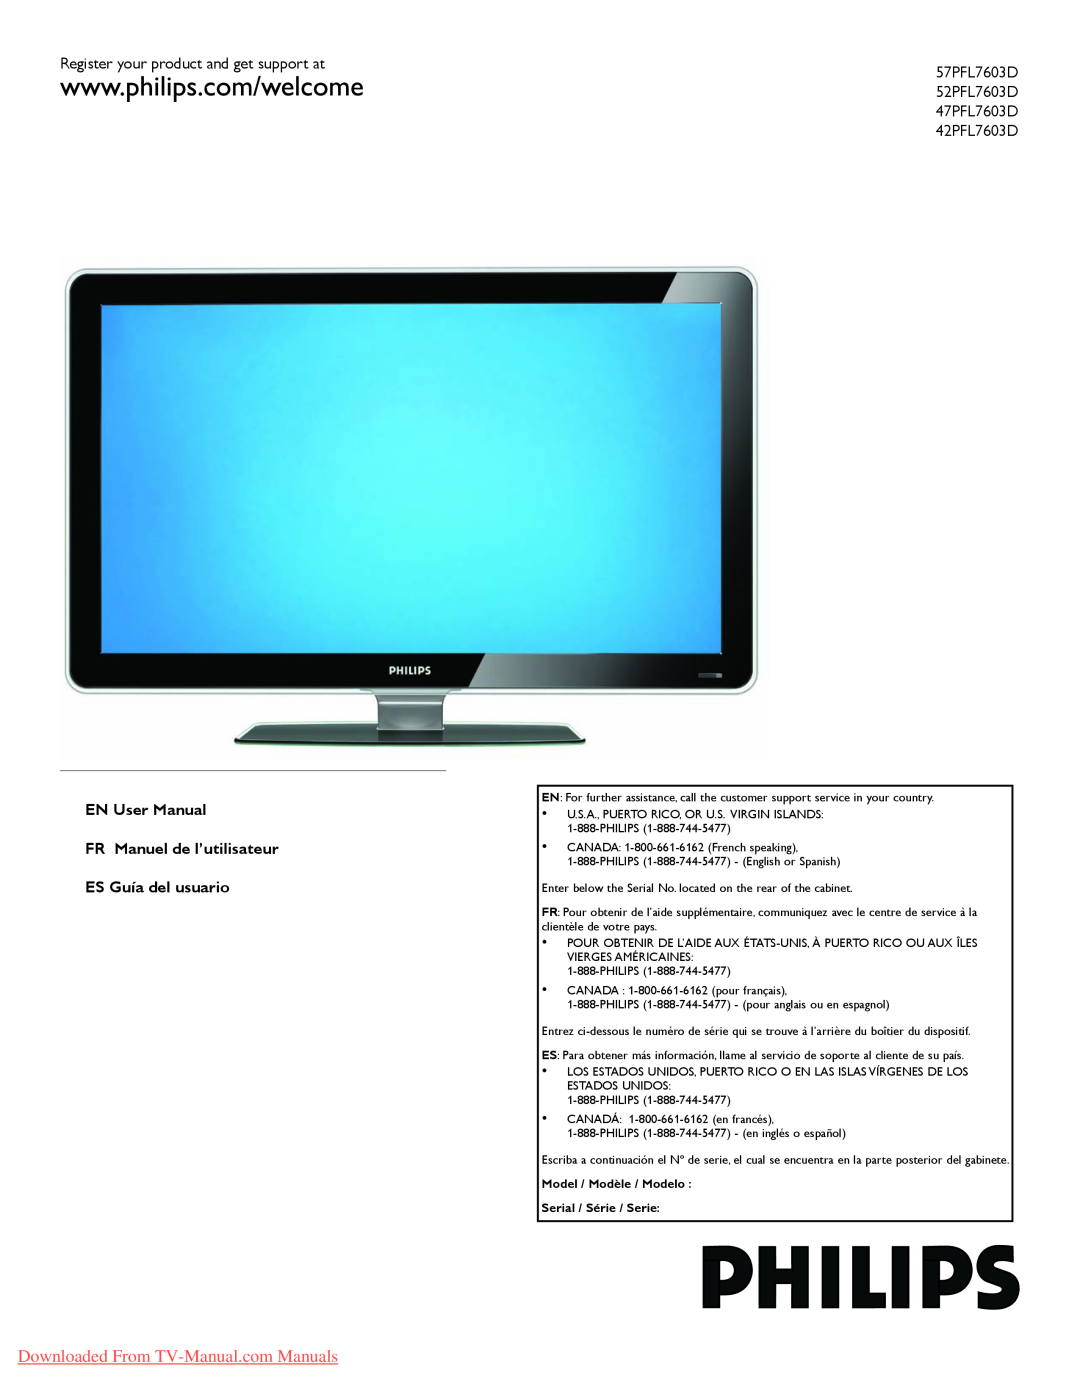 Philips 52PFL7603D, 47PFL7603D, 42PFL7603D, 57PFL7603D user manual Downloaded From TV-Manual.com Manuals 